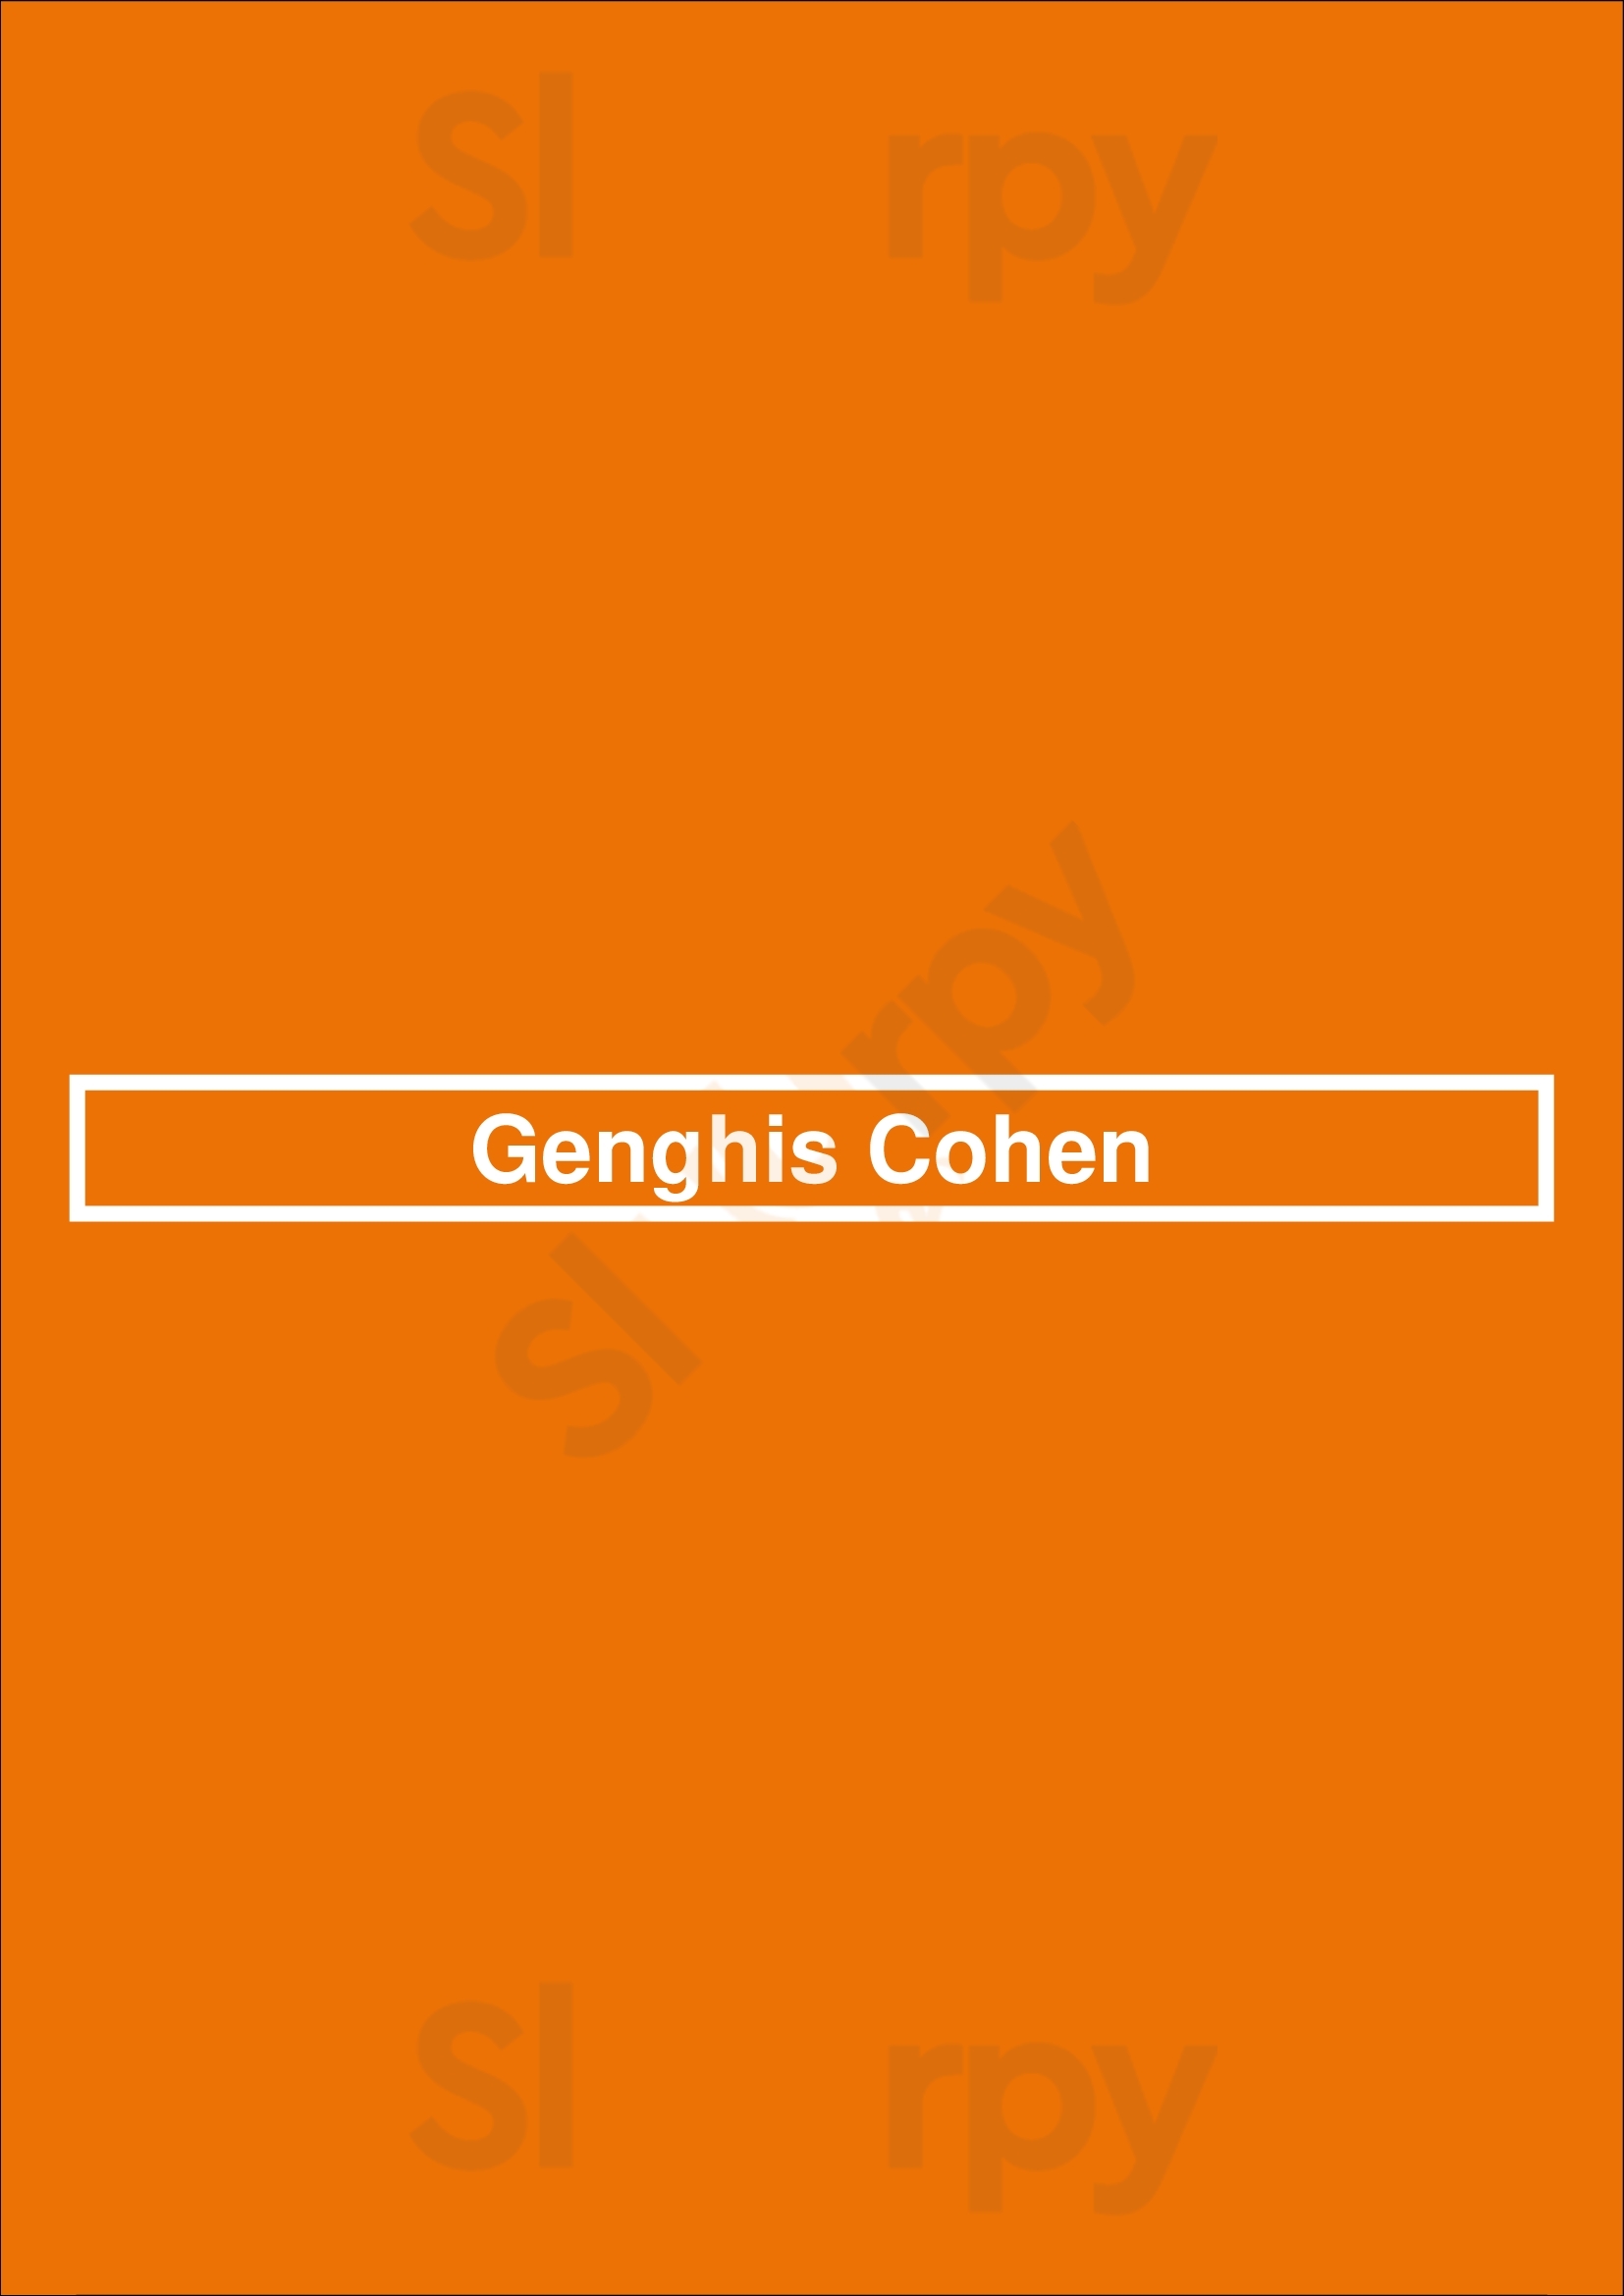 Genghis Cohen Los Angeles Menu - 1